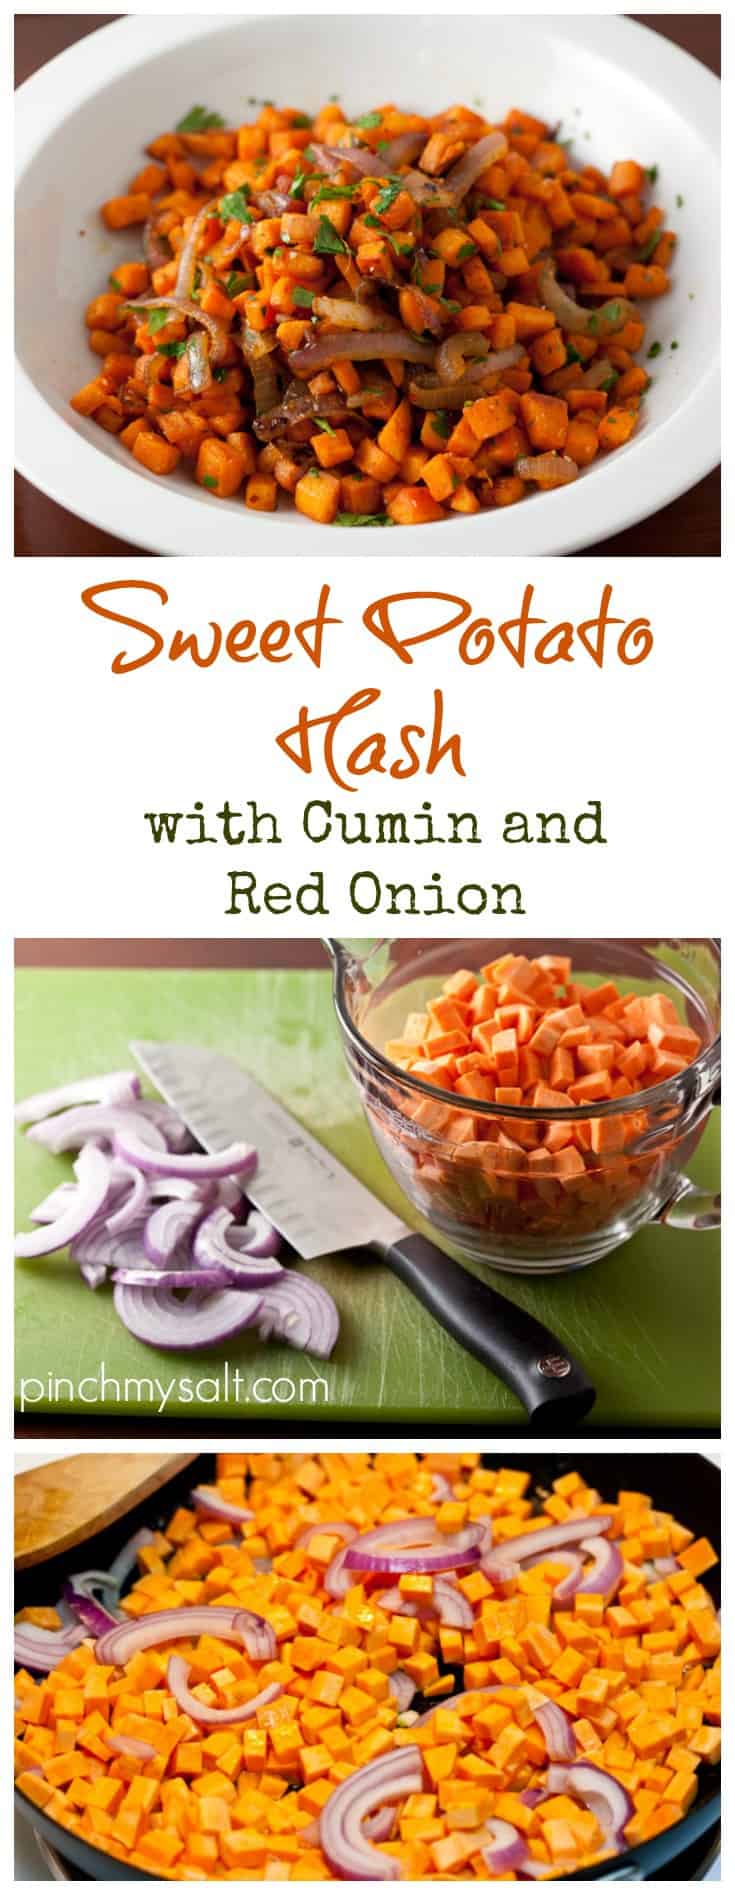 Sweet Potato Hash with Cumin and Red Onion | pinchmysalt.com